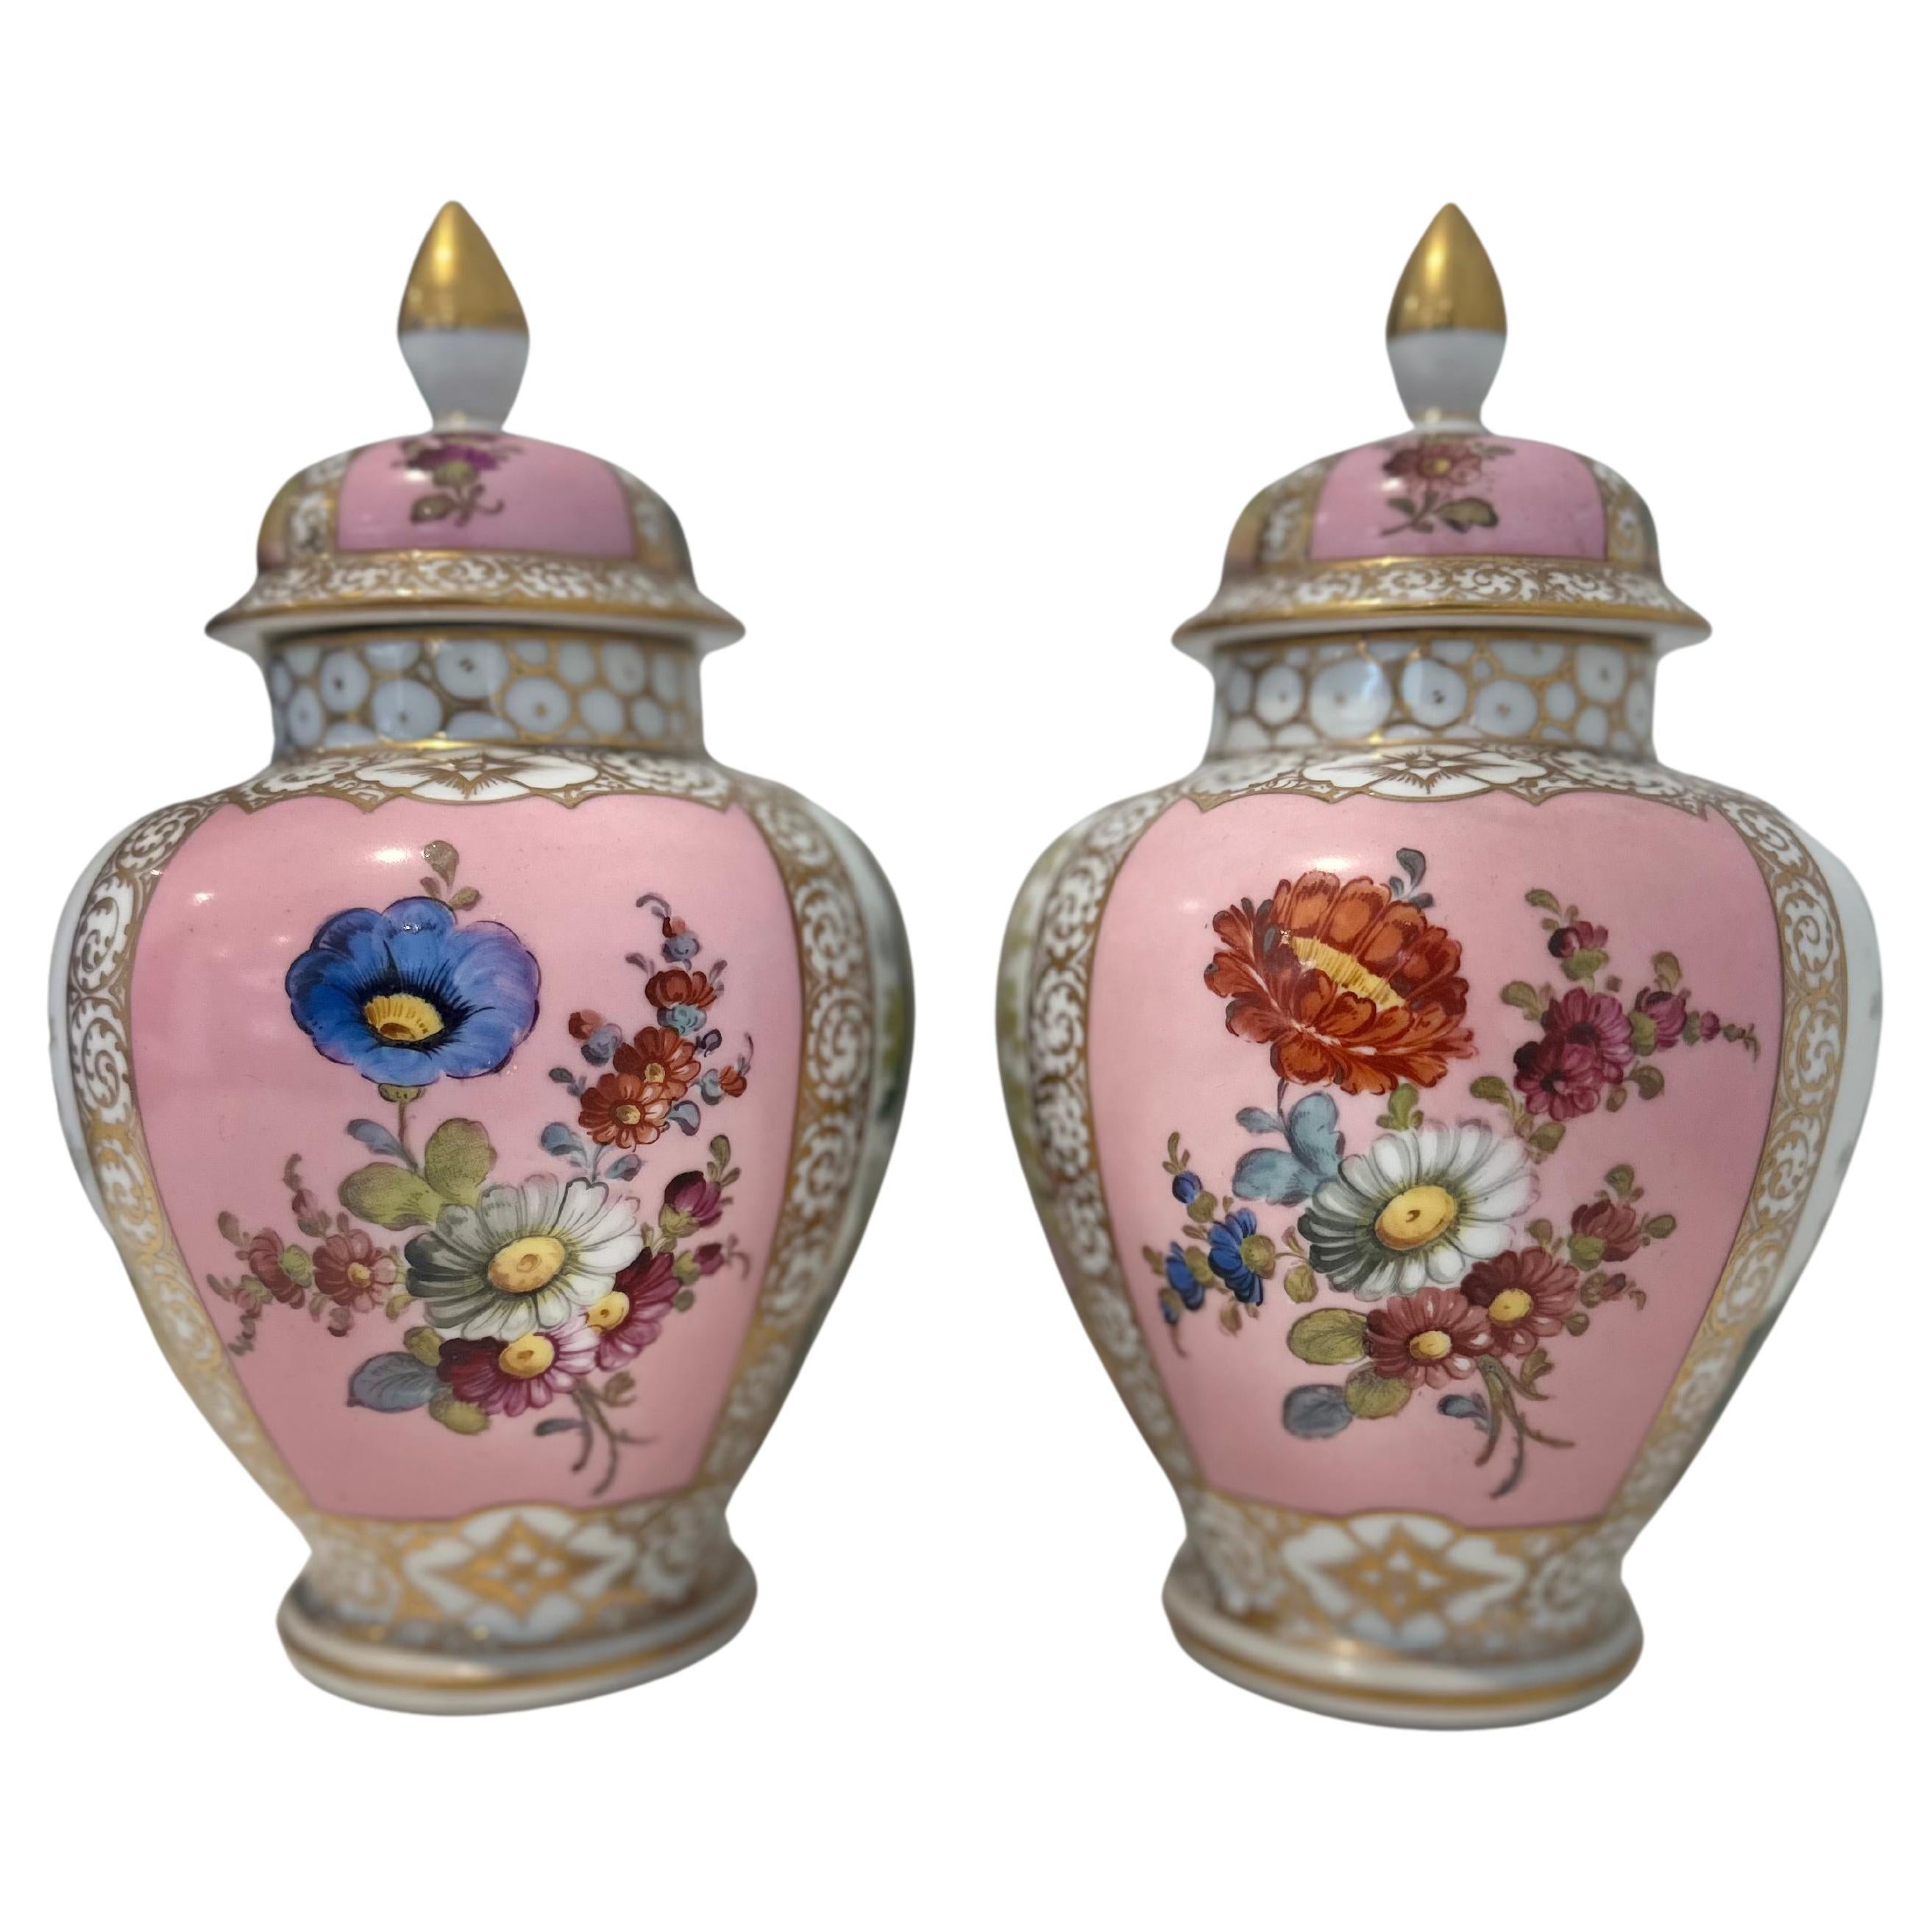 A lovely pair of Dresden porcelain lined vases